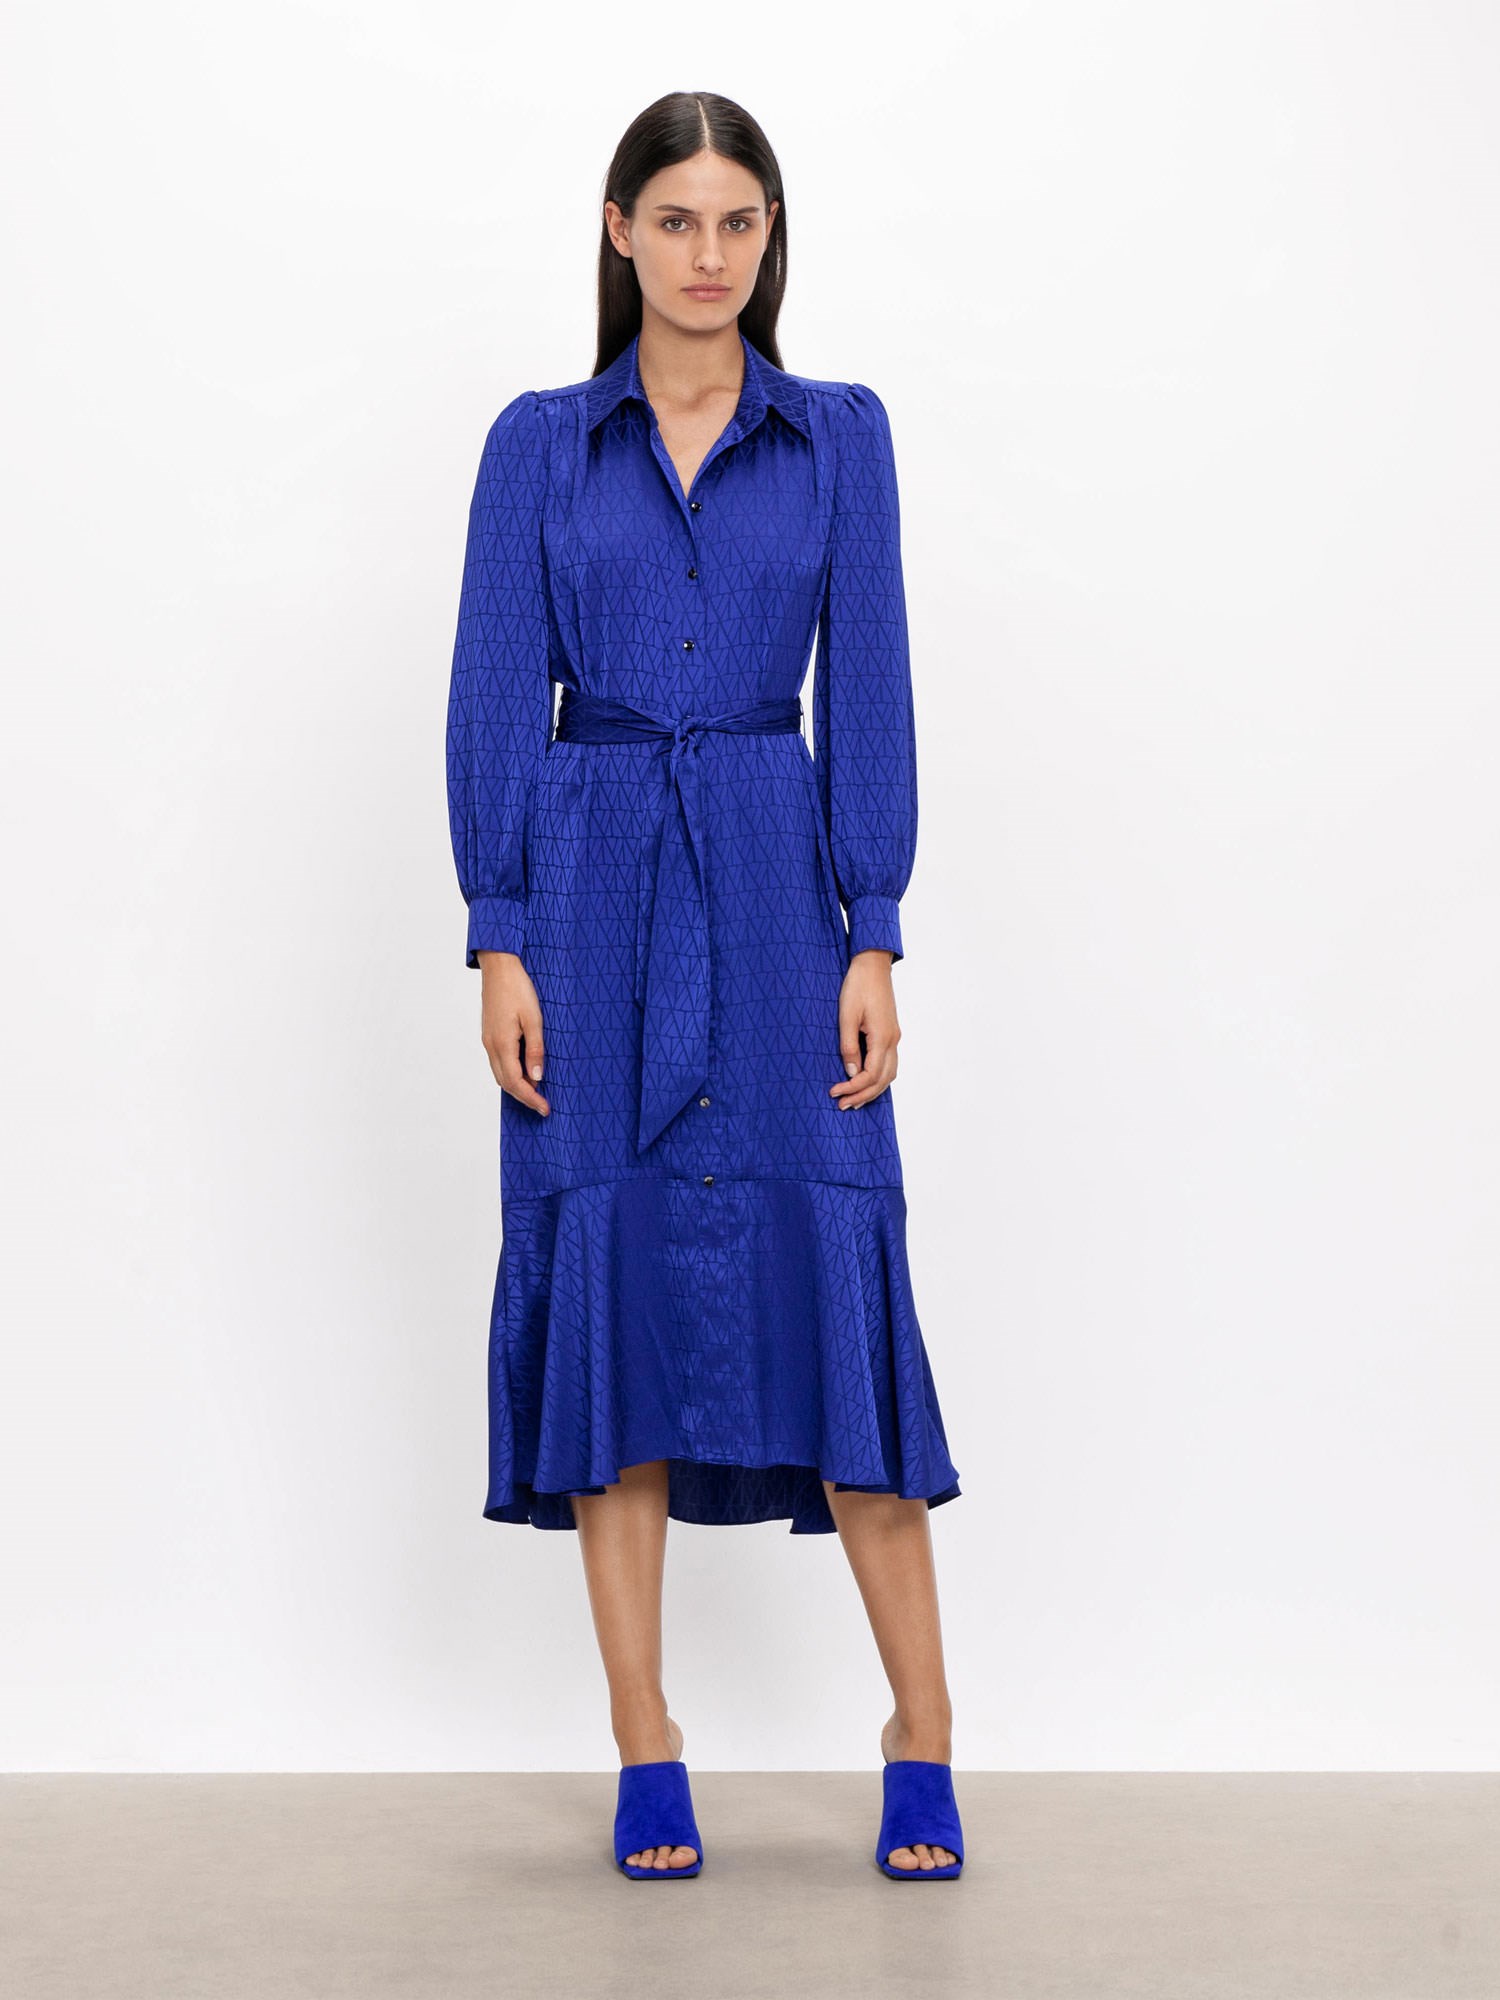 Monogram Jacquard Midi Dress | Buy Dresses Online - Veronika Maine